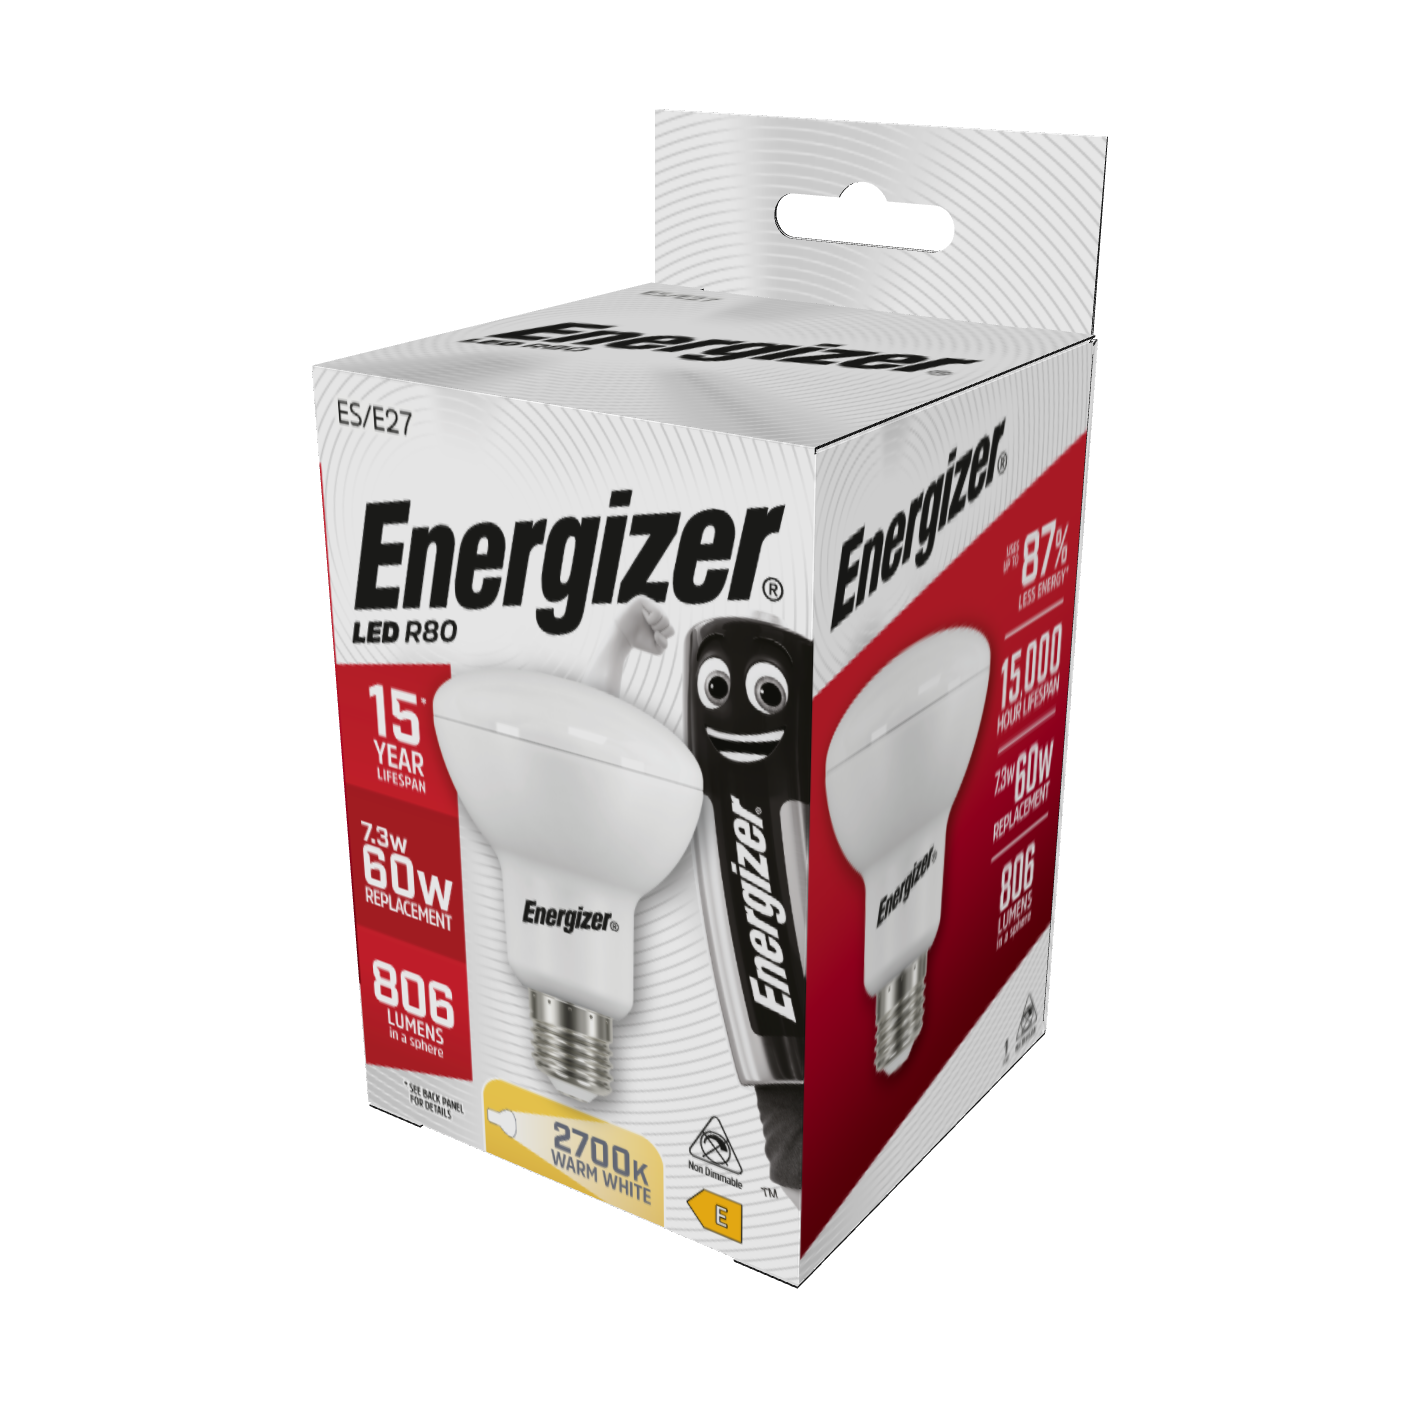 Energizer LED R80 Reflektor E27 (ES) 806lm 7,3W 2.700K (Warmweiß), Packung mit 1 Stück